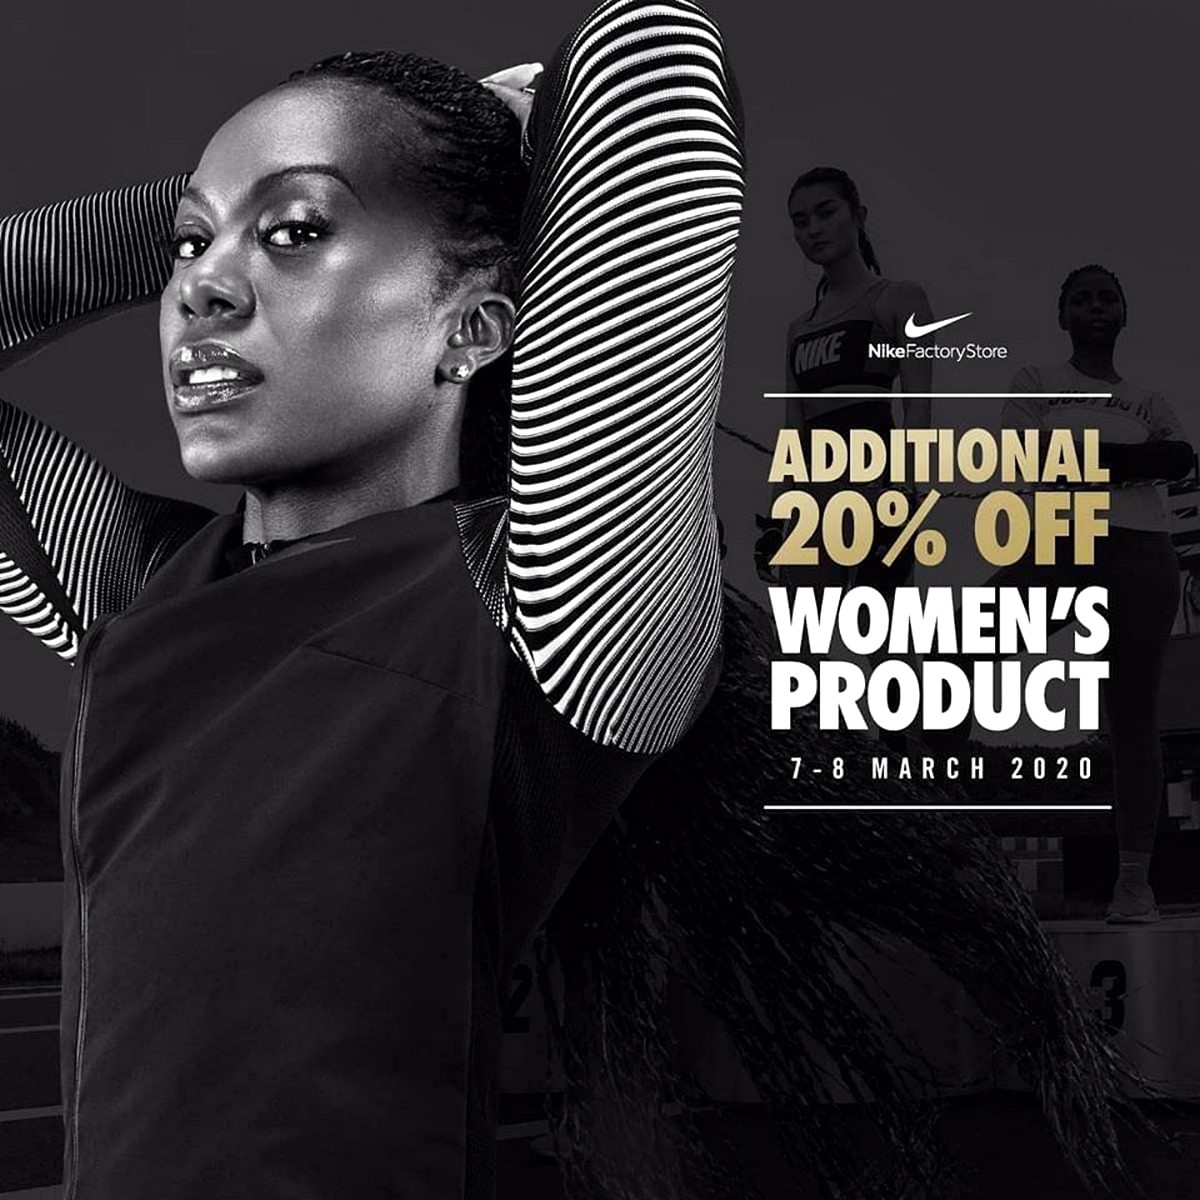 7-8 Mar 2020: Nike Factory Store Women 